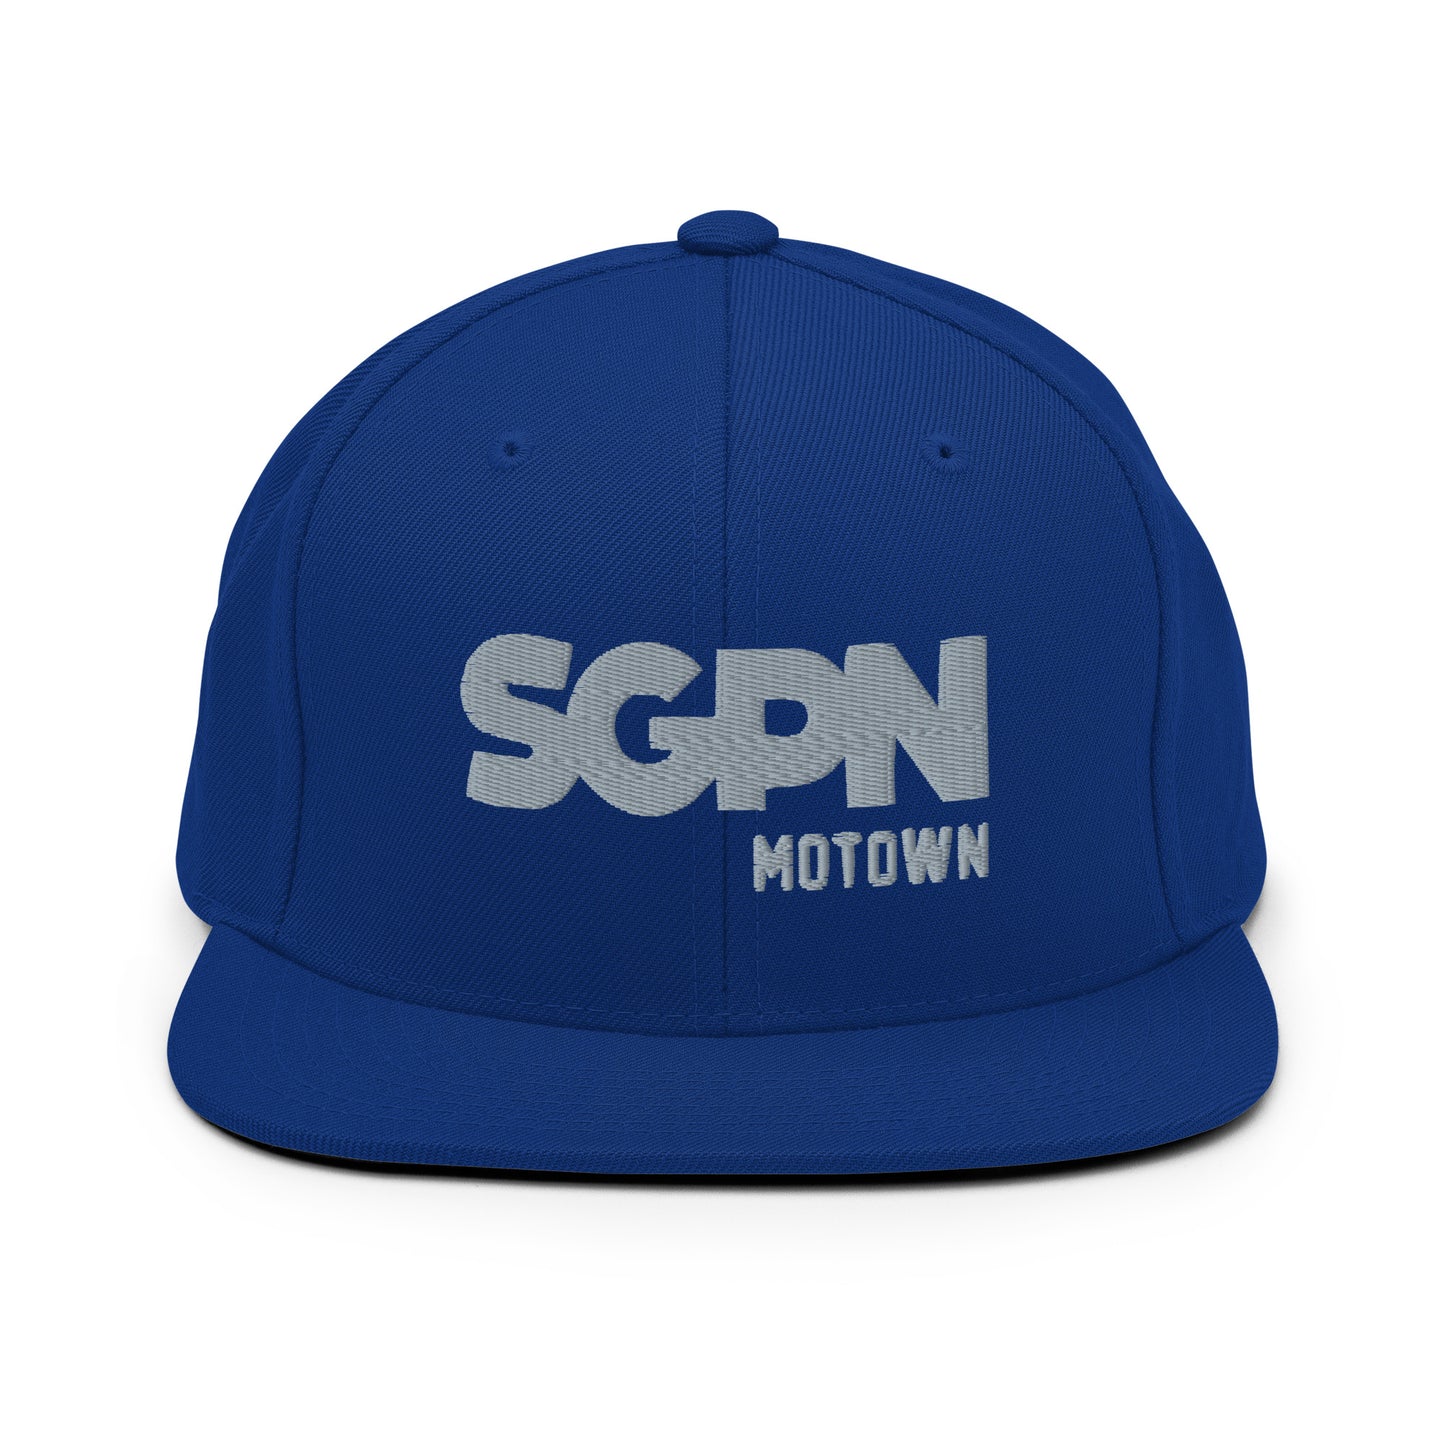 SGPN - Motown edition - Snapback Hat